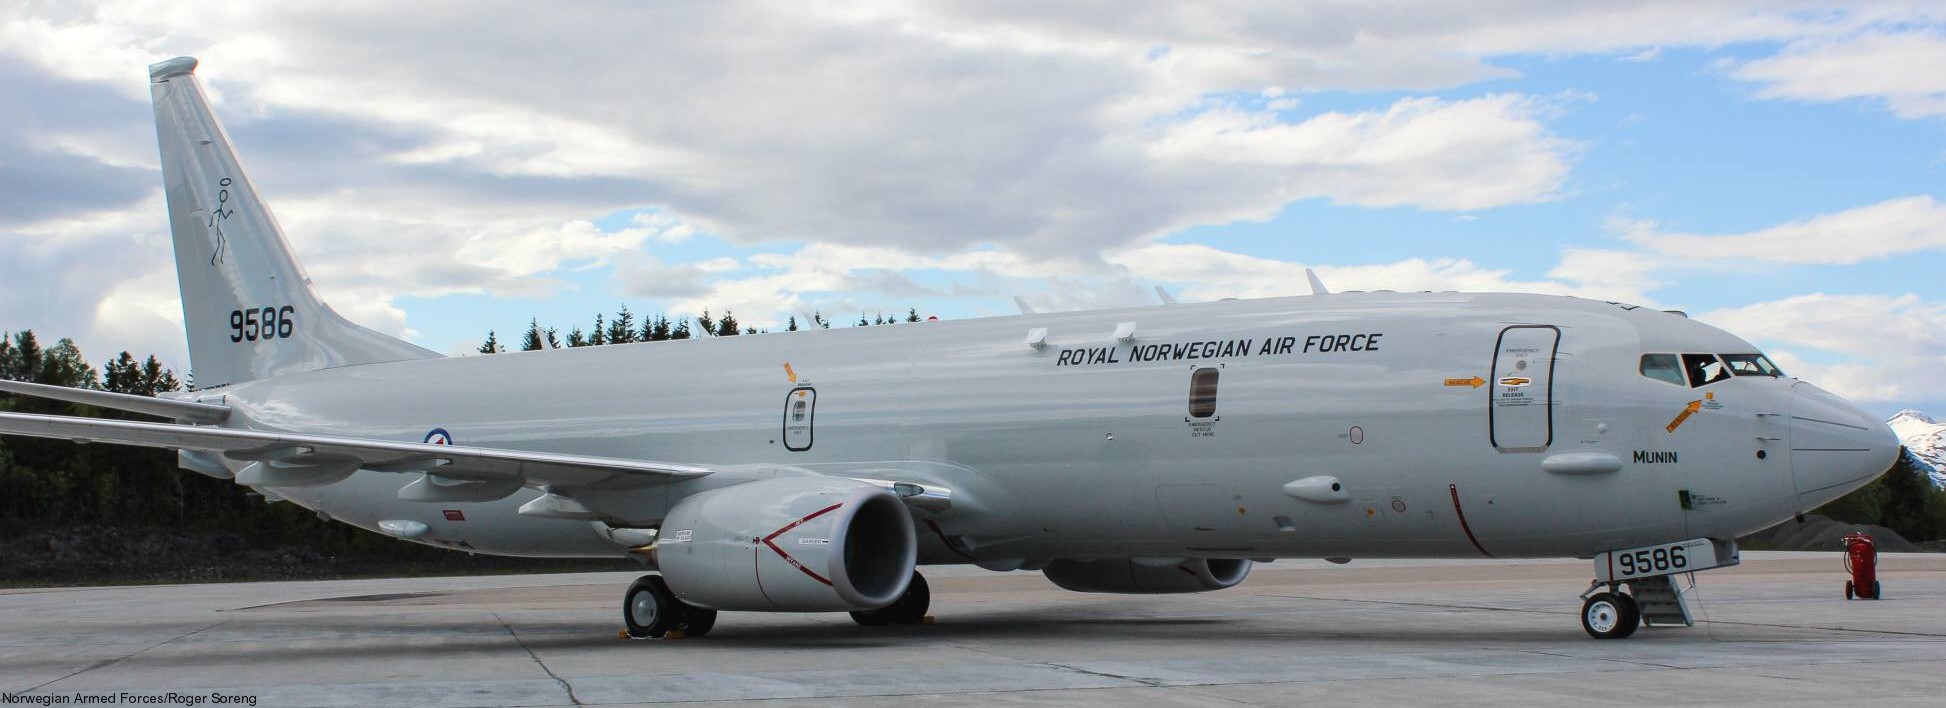 p-8a poseidon maritime patrol aircraft royal norwegian air force luftforsvaret 9586 munin 04